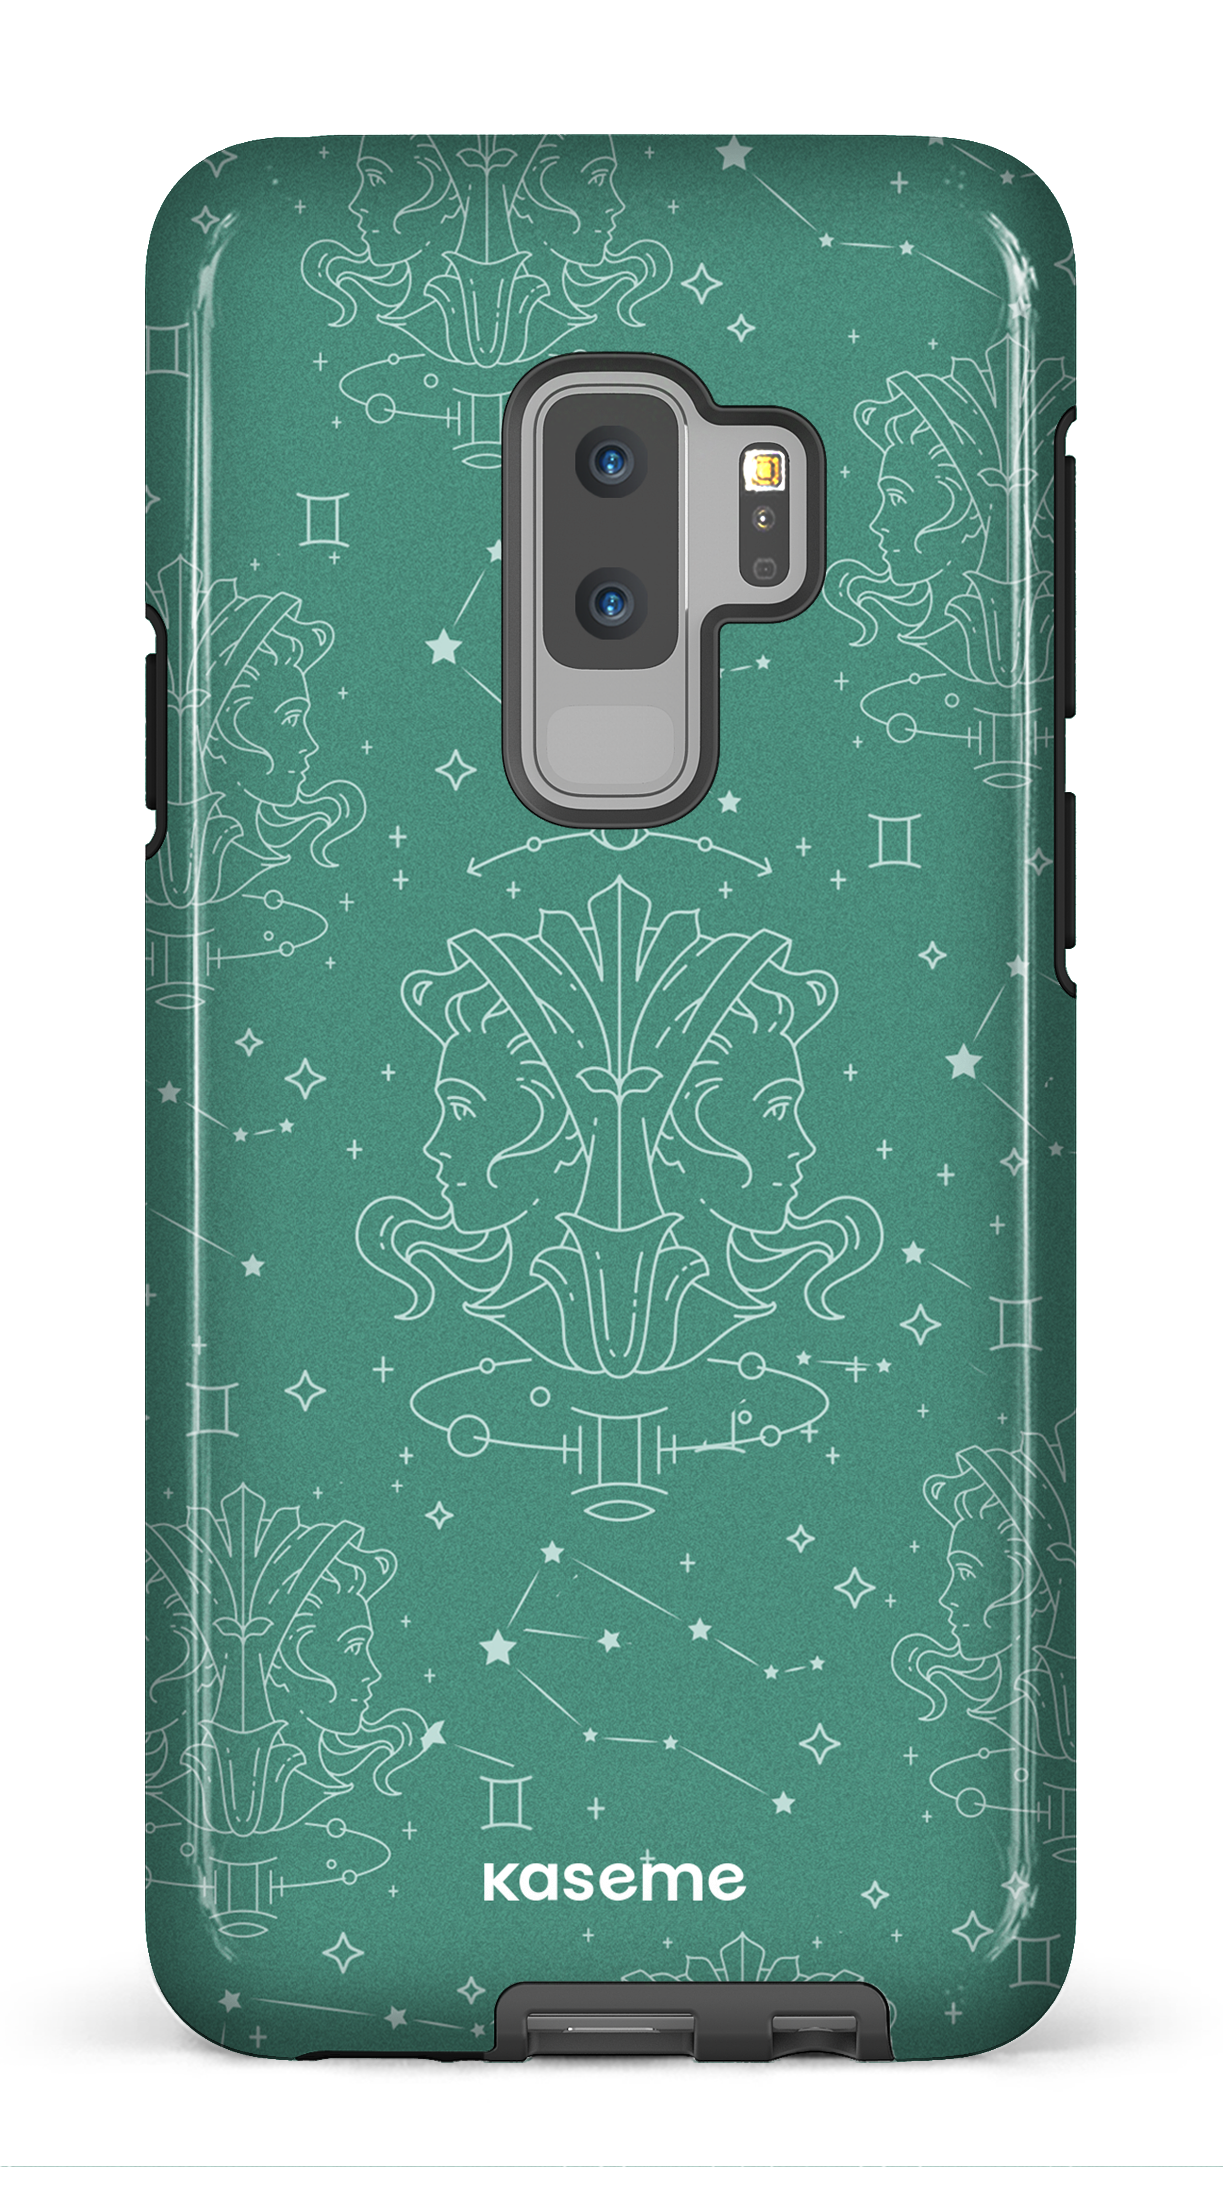 Gemini - Galaxy S9 Plus